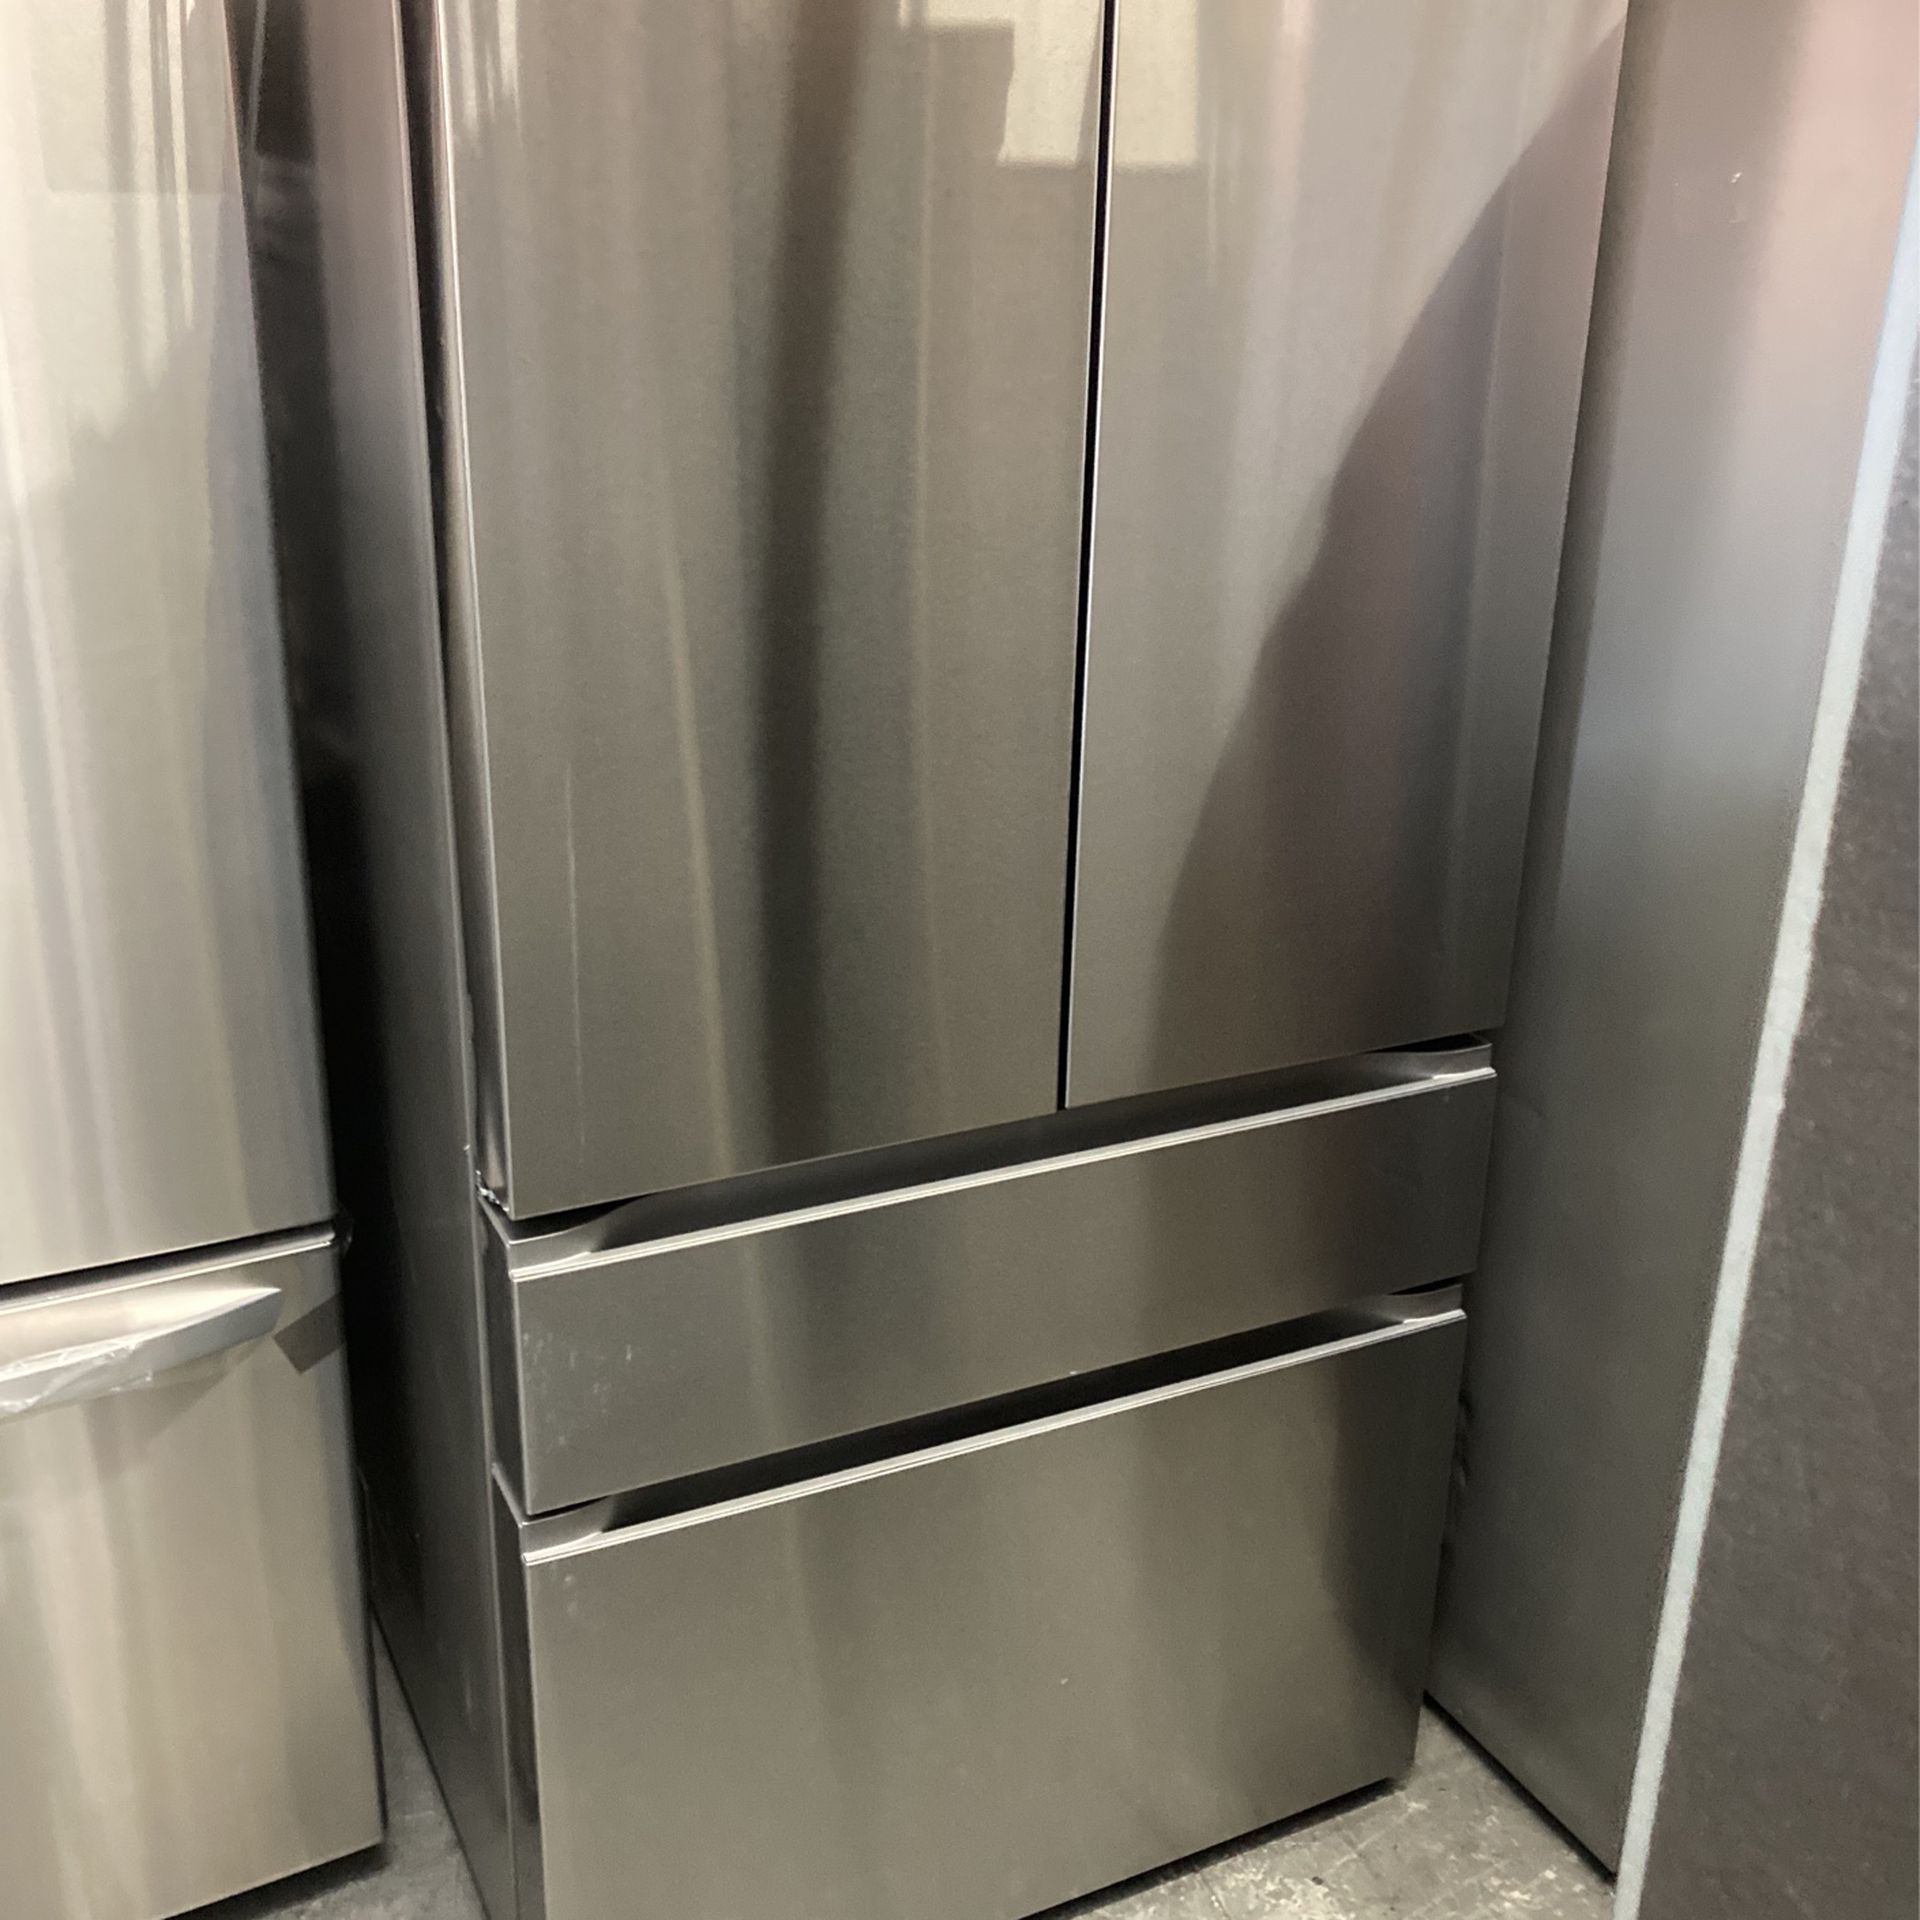 LG French Door Refrigerator